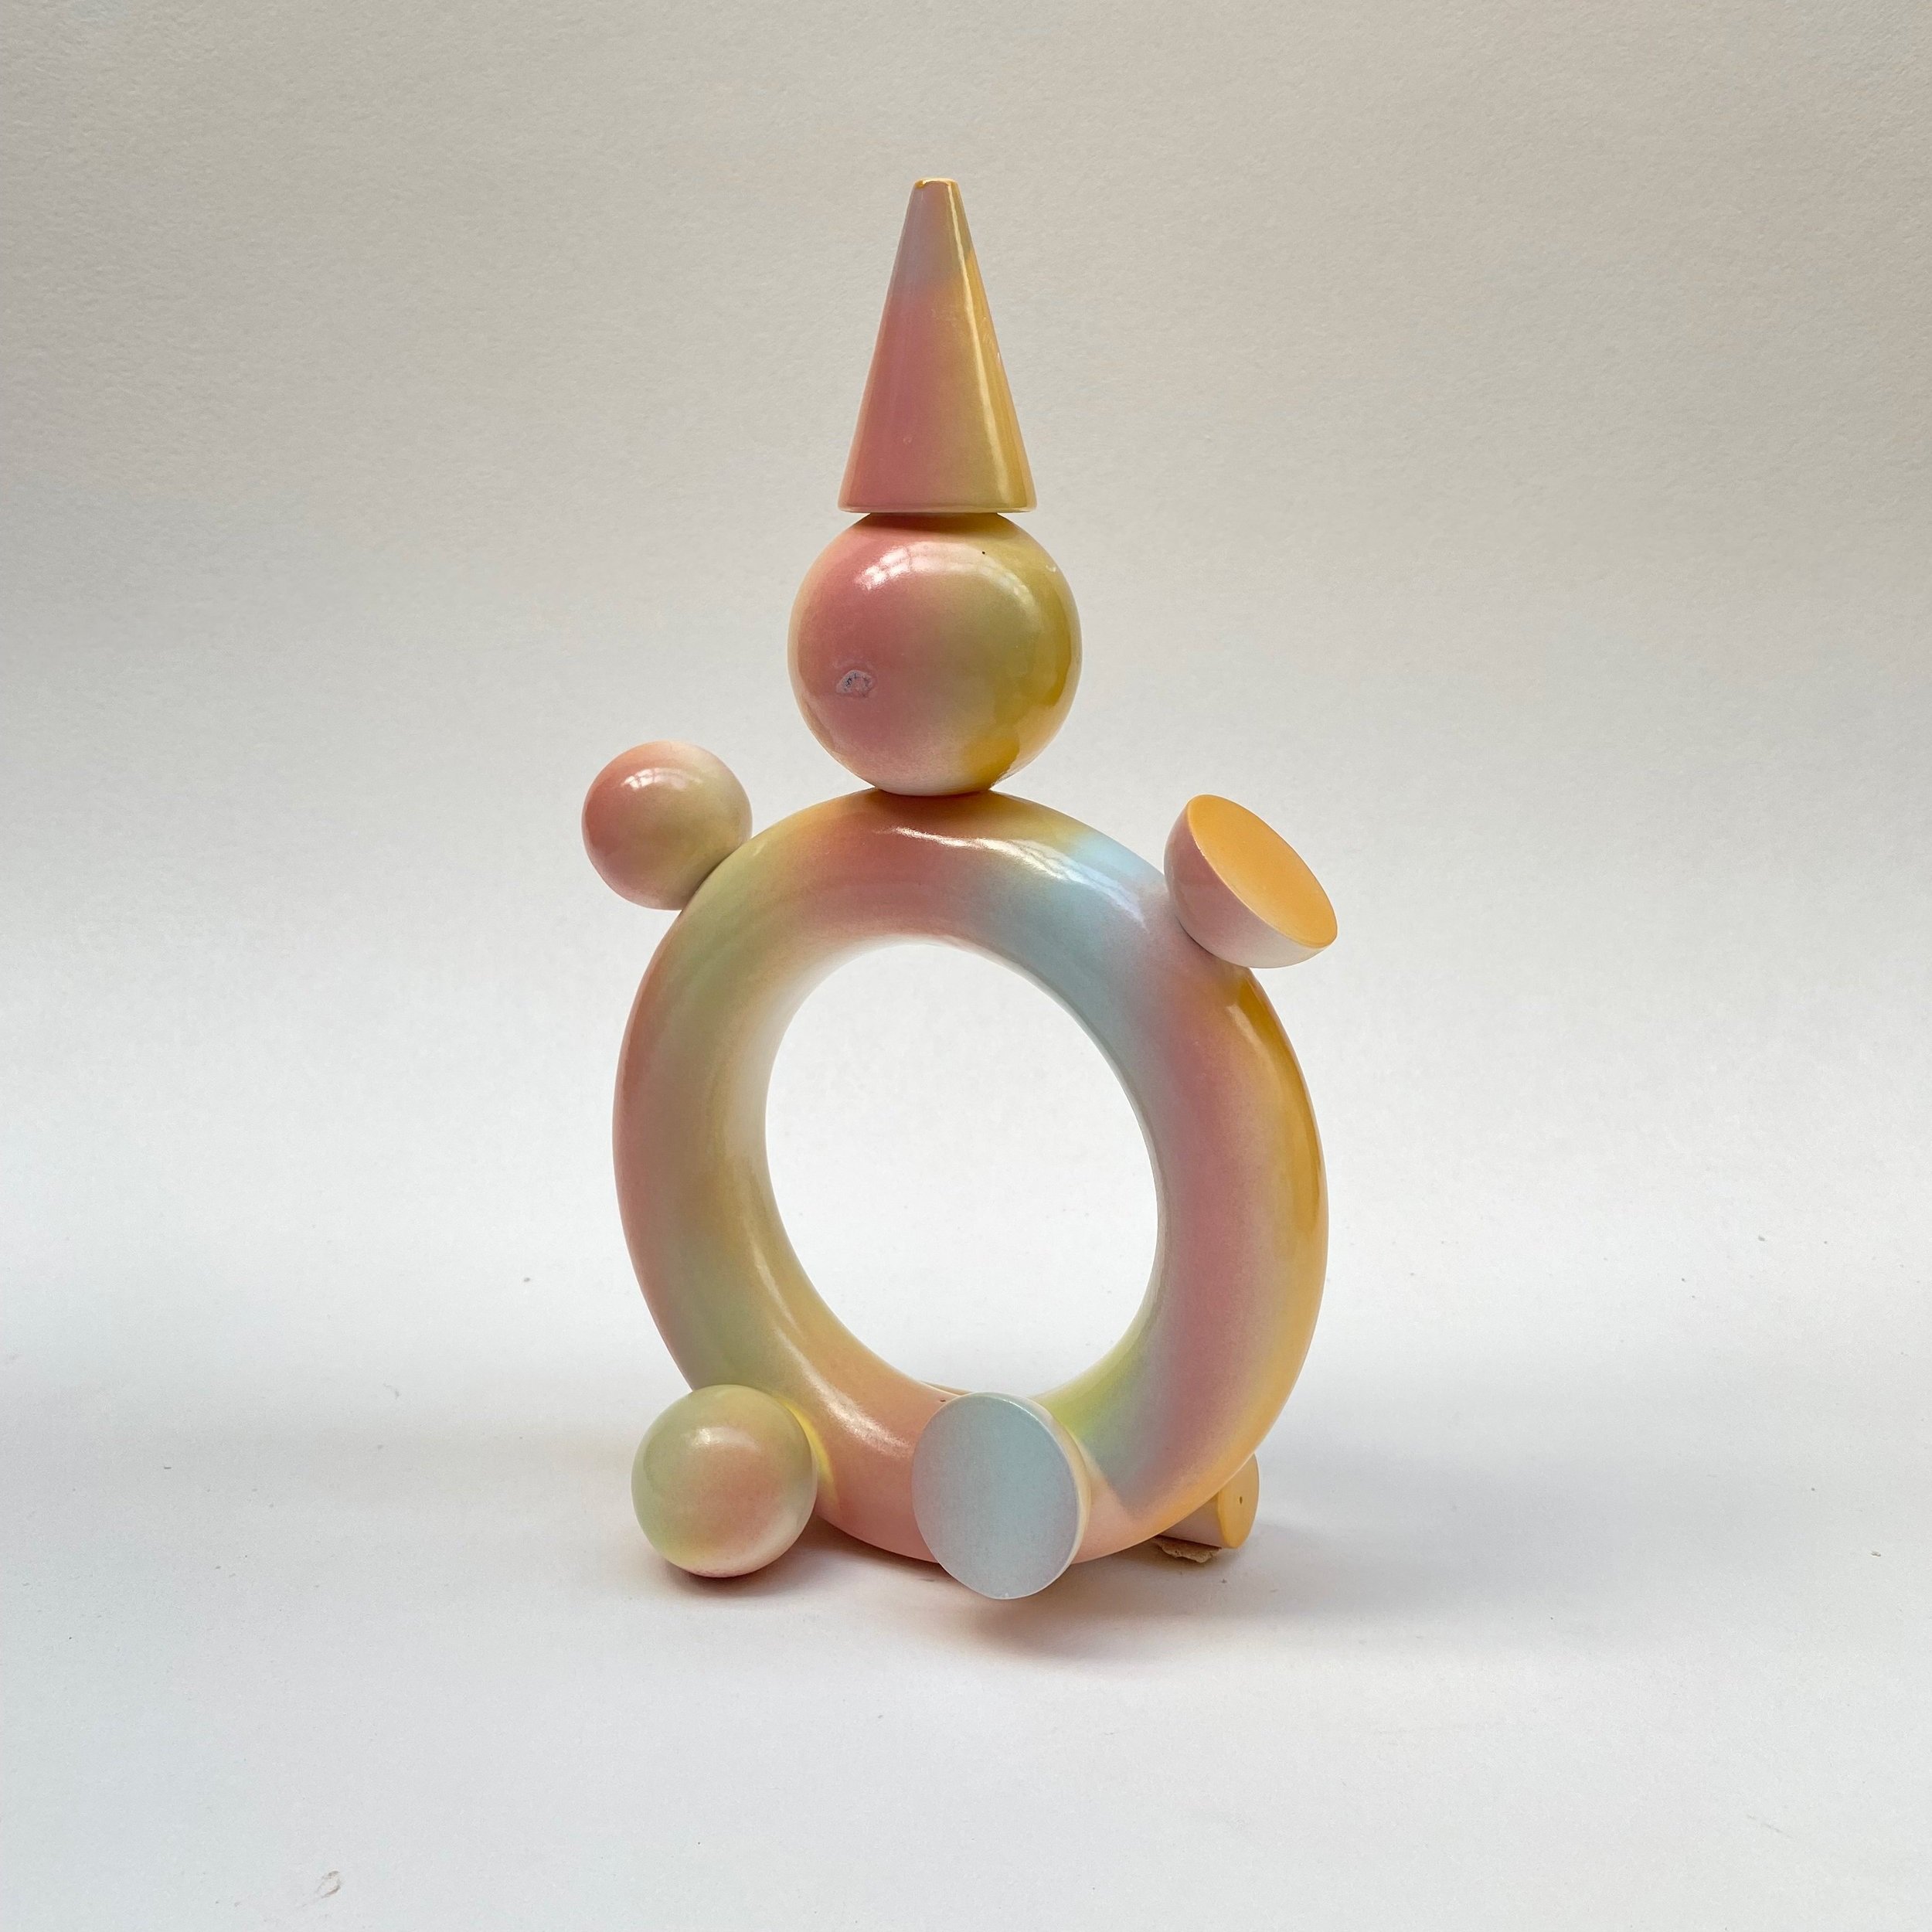 Aliona+Kryshtofik_geometric+sculpture+3_2021_porcelain_25x25cm.jpg